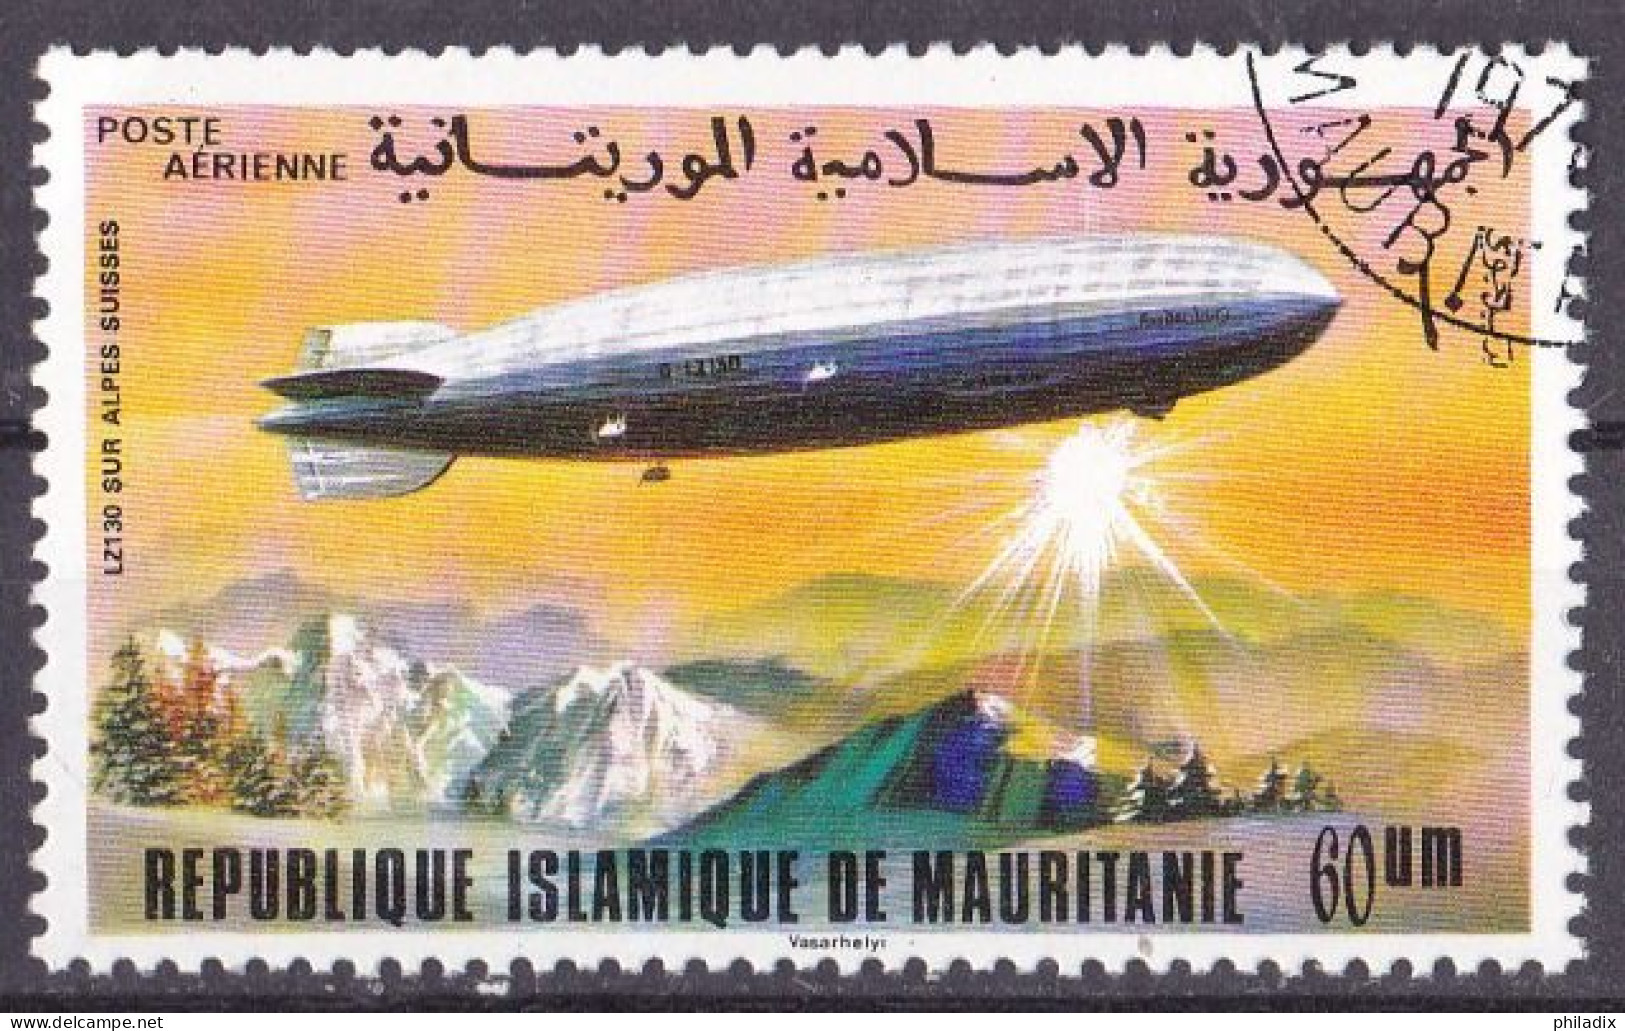 Mauretanien Marke Von 1976 O/used (A5-10) - Mauritania (1960-...)